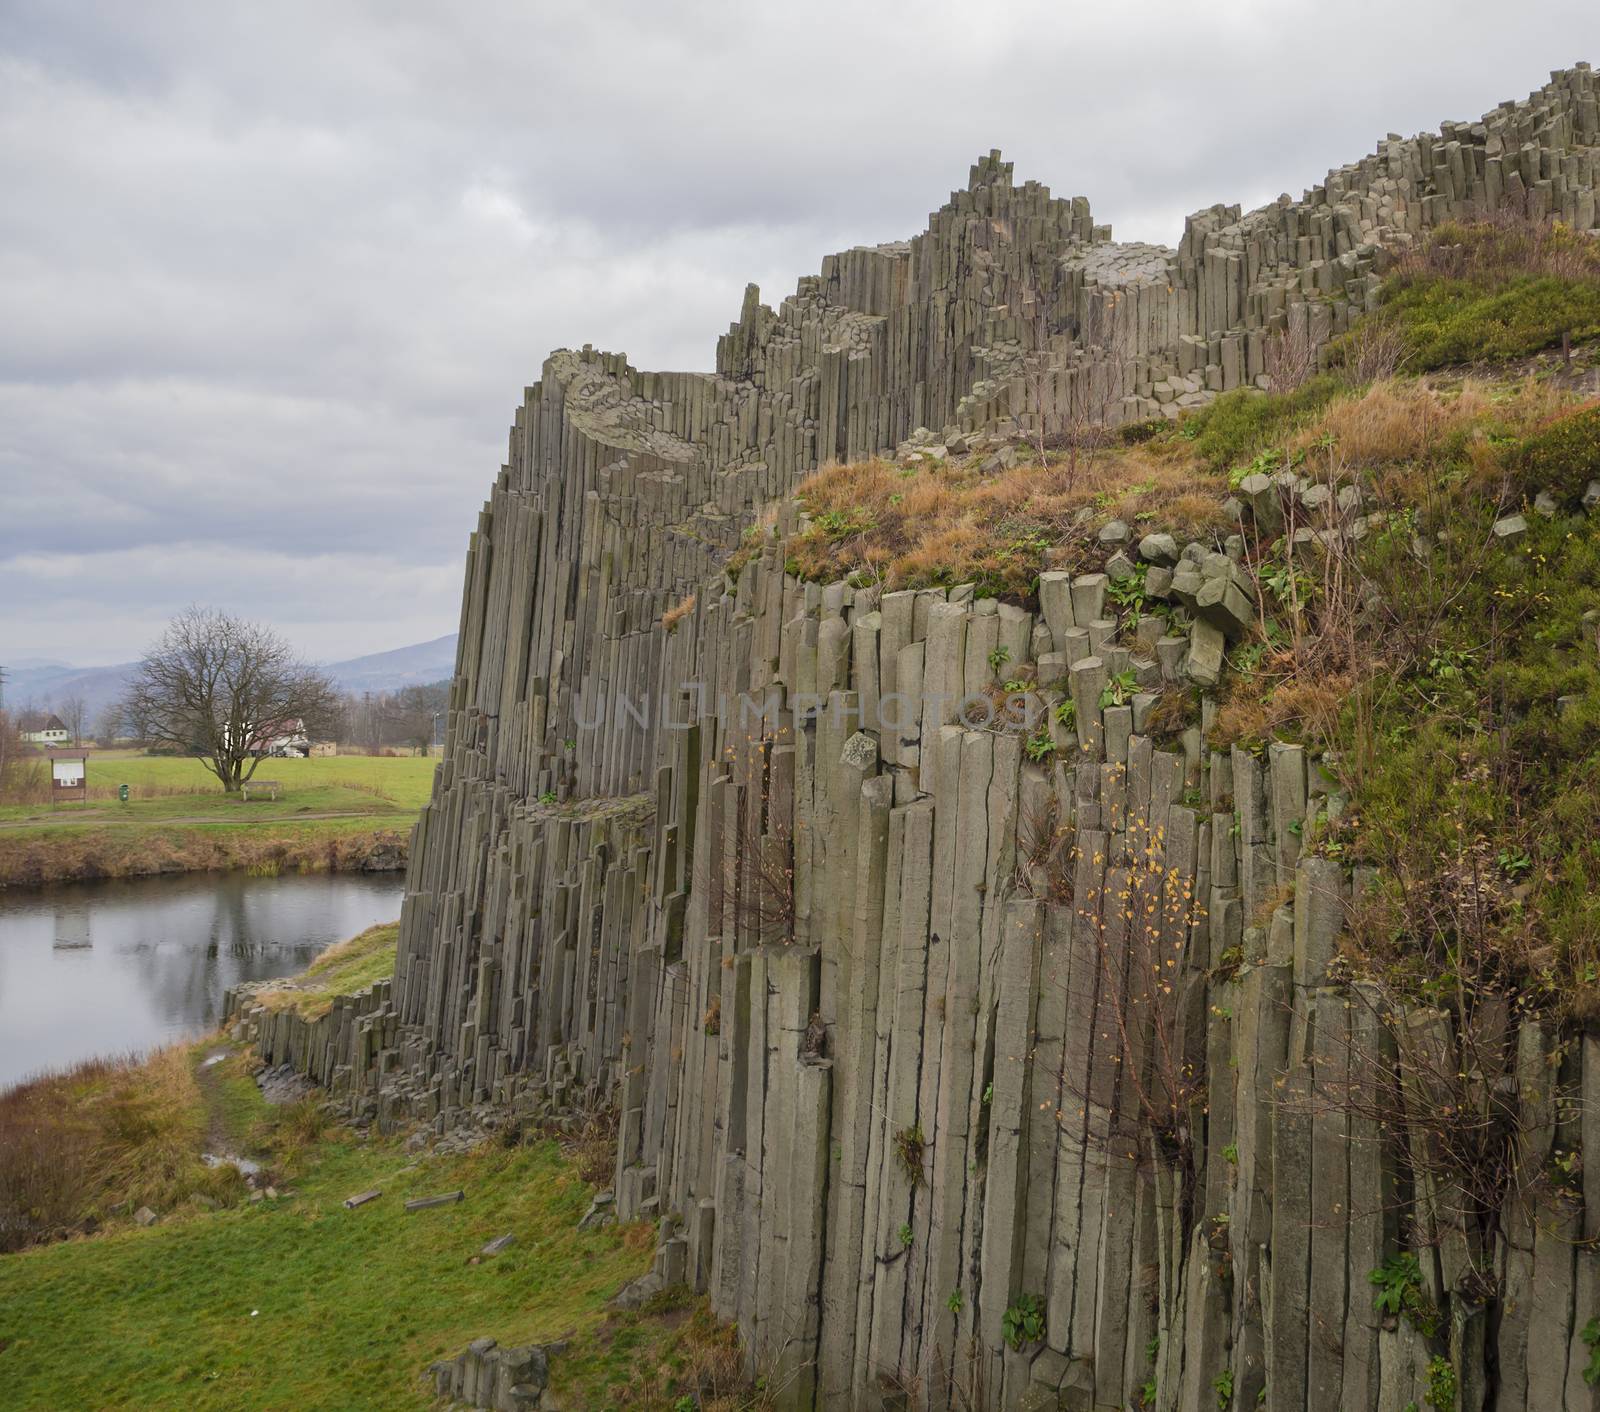 basalt column pillars lava vulcanic rock formation organ shape with lake panska skala in kamenicky senov prachen czech republic